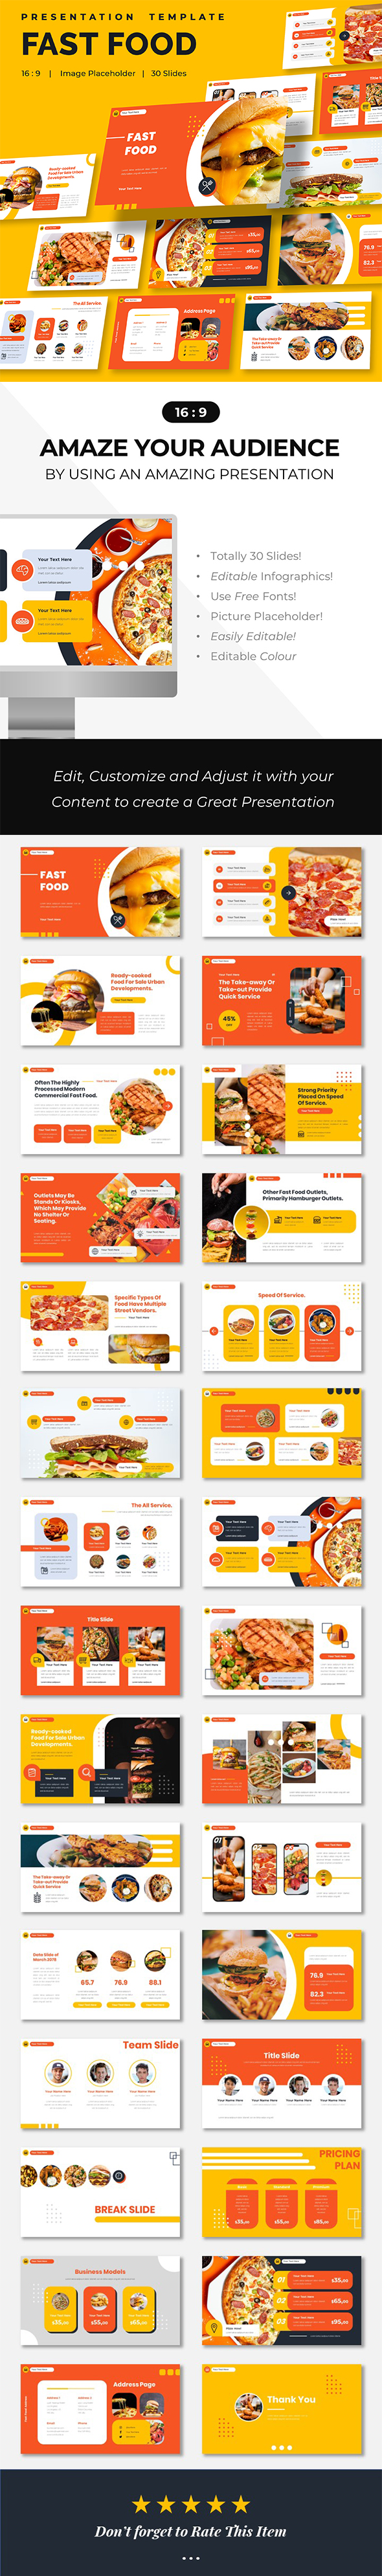 Fast Food - Service Culinary Business Presentation Google Slides Template